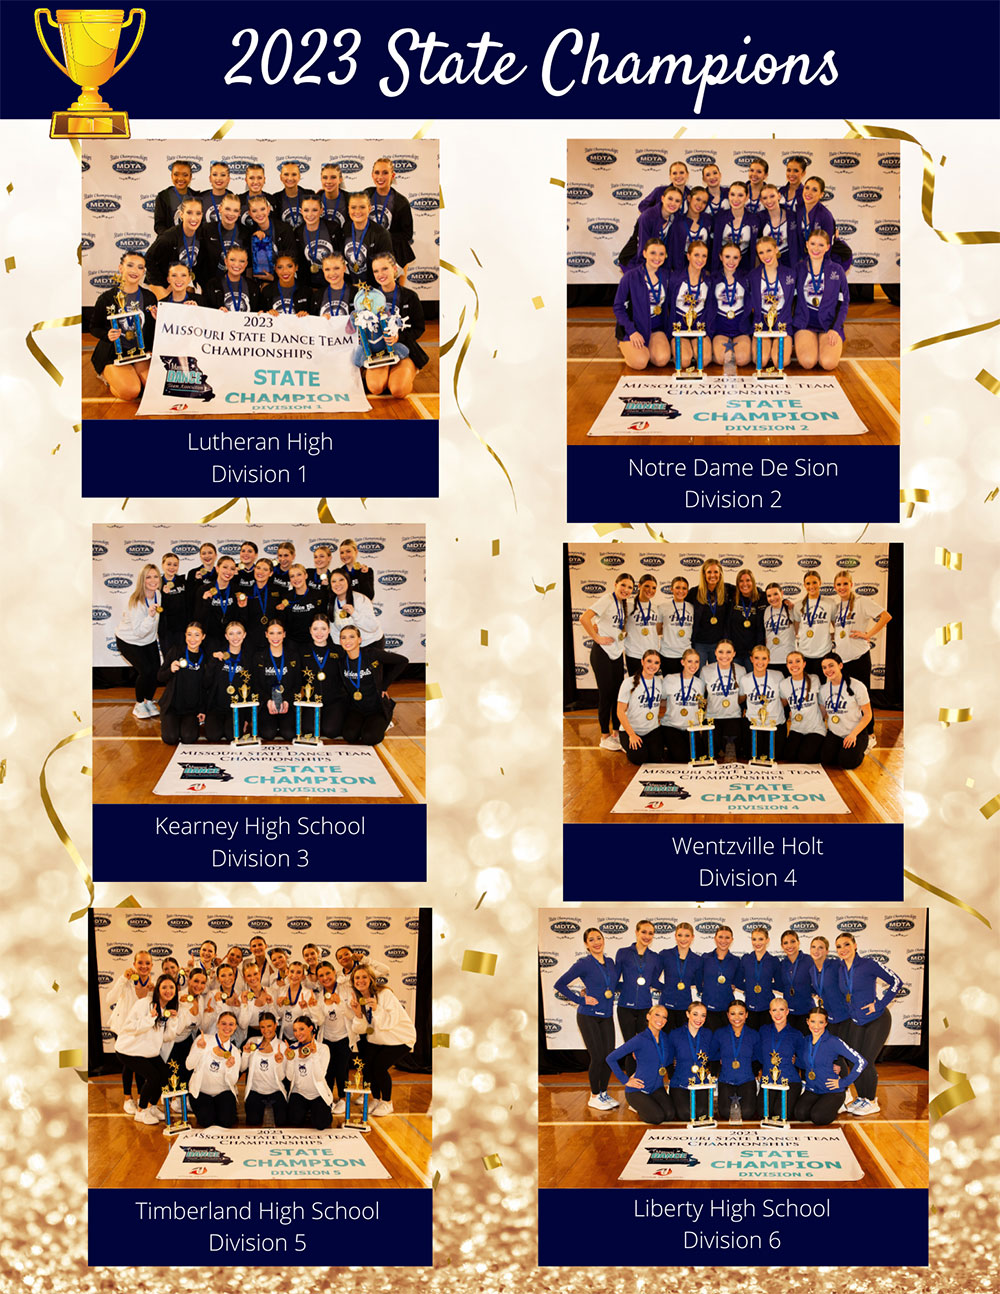 2023 State Champions for Missouri Dance Team Association in St. Charles Missouri